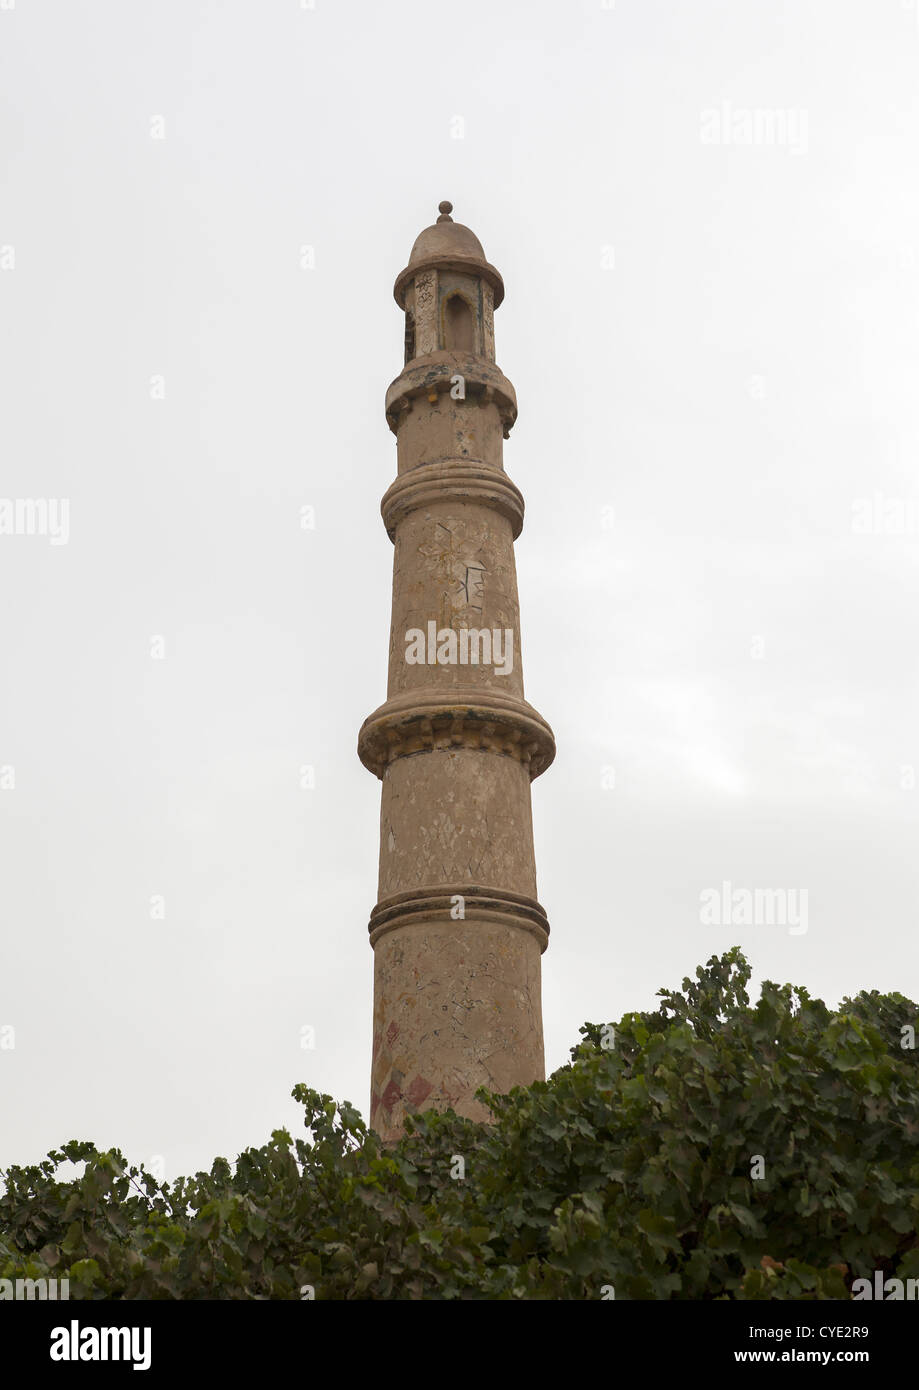 Minaret Of Imam Asim Mosque In The Taklamakan Desert, Xinjiang Uyghur Autonomous Region, China Stock Photo